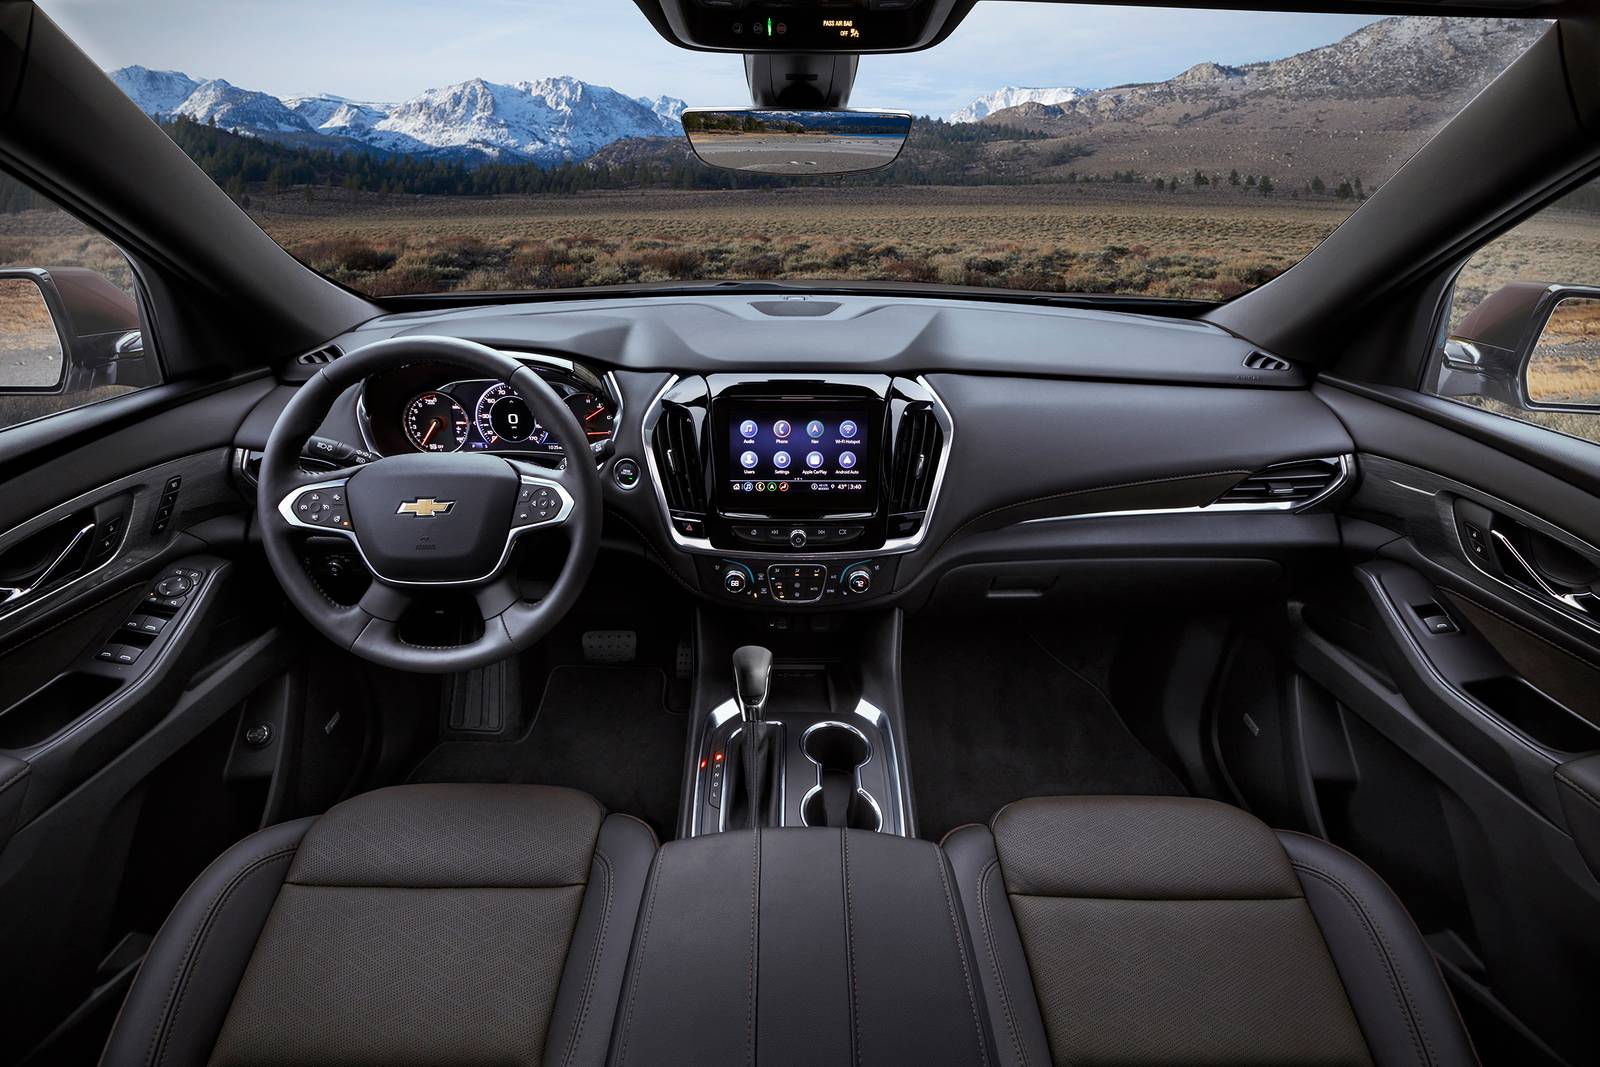 Chevrolet Traverse interior - Cockpit